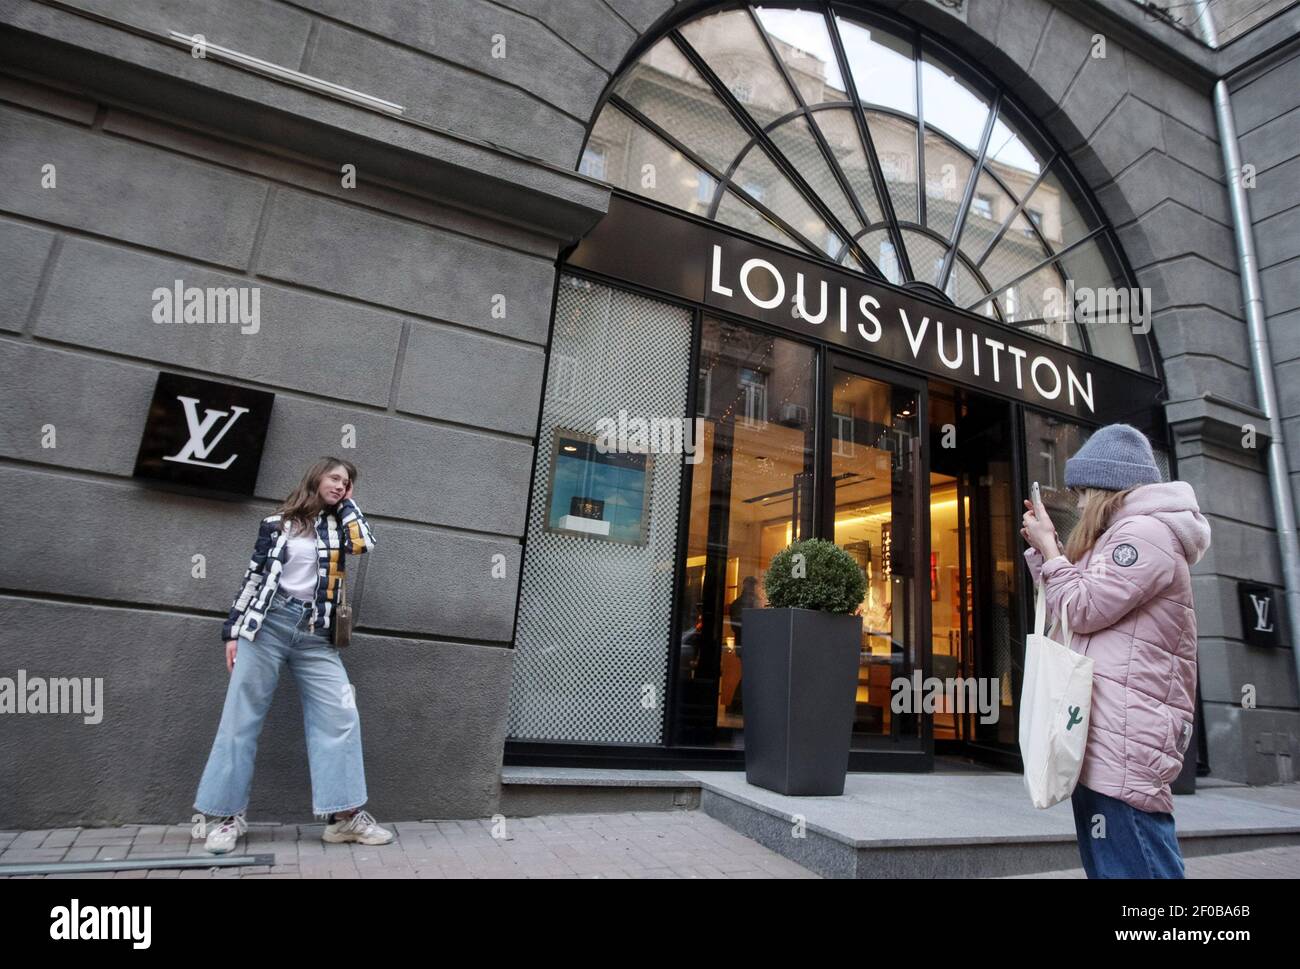 A girl poses for a photo next to Louis Vuitton logo or shortened